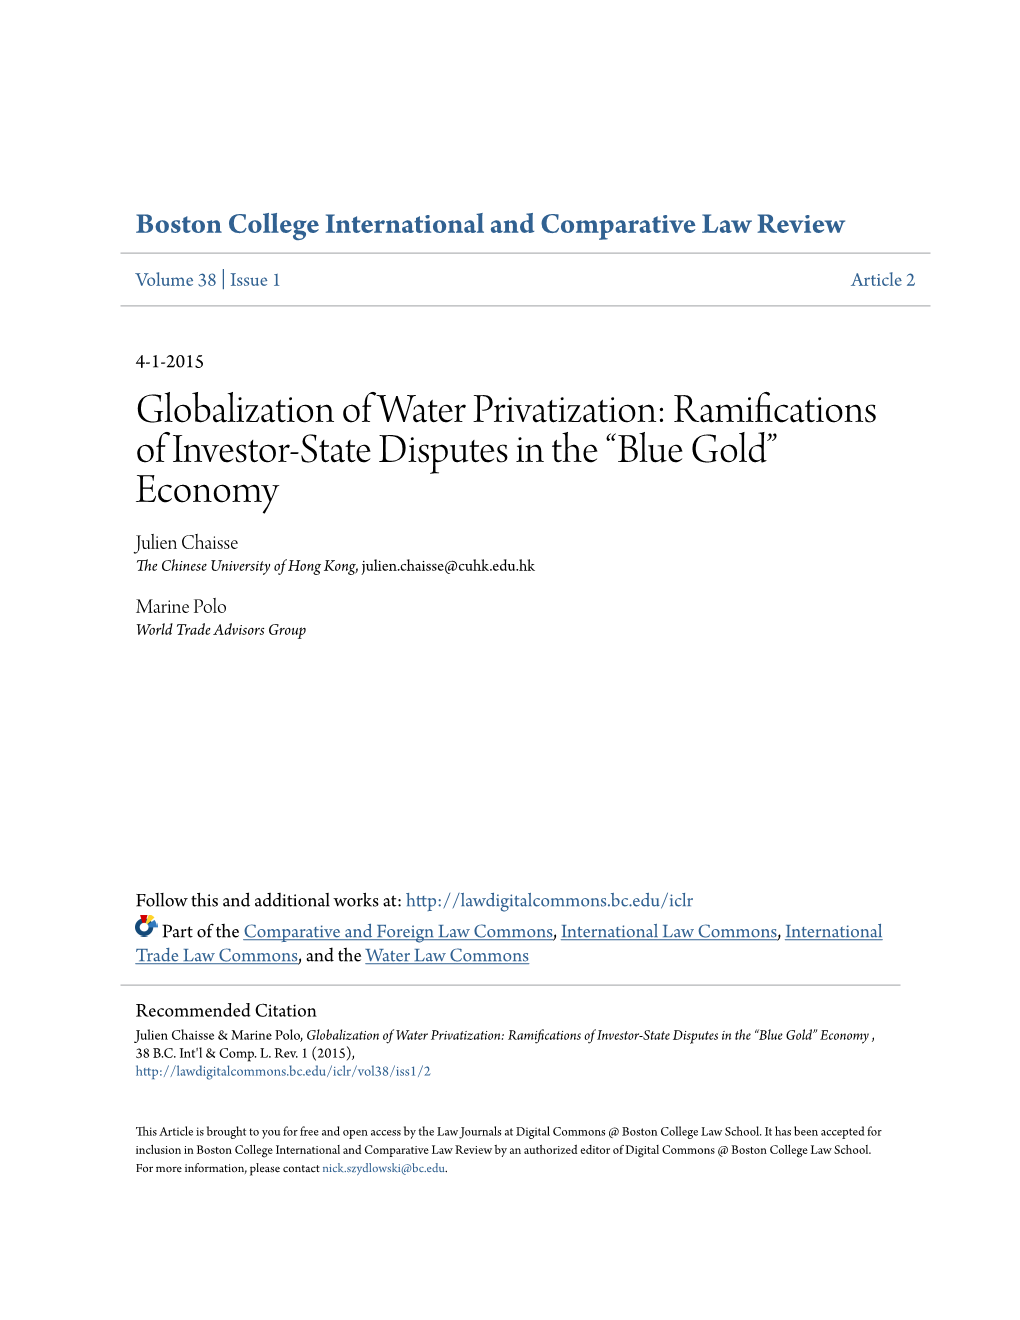 Globalization of Water Privatization